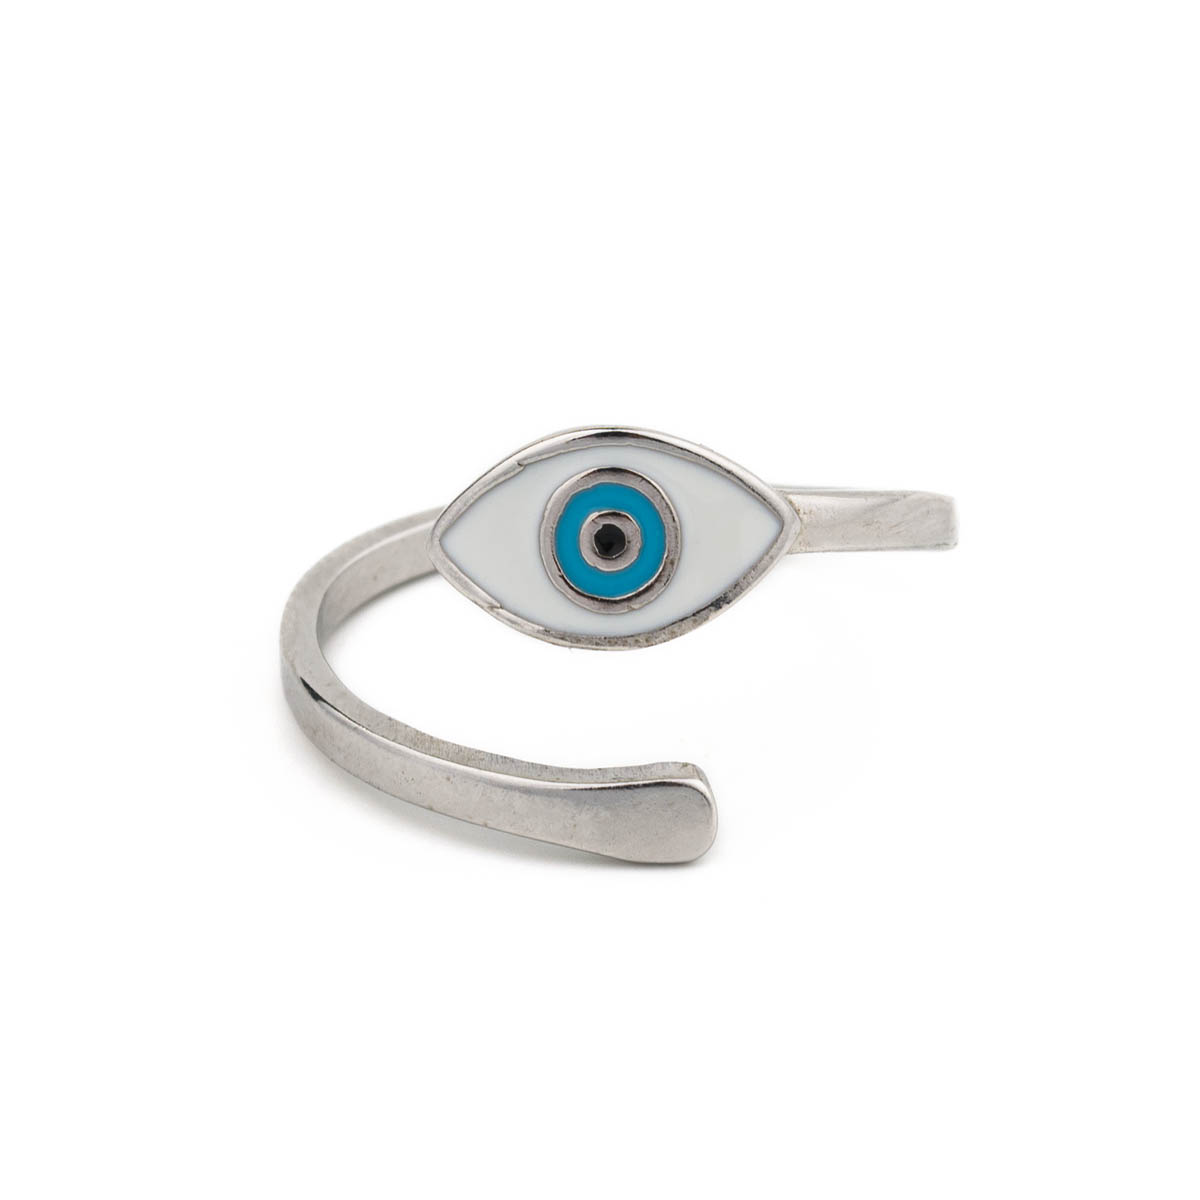 Adjustable Evil Eye Ring - turquoise and white enamel